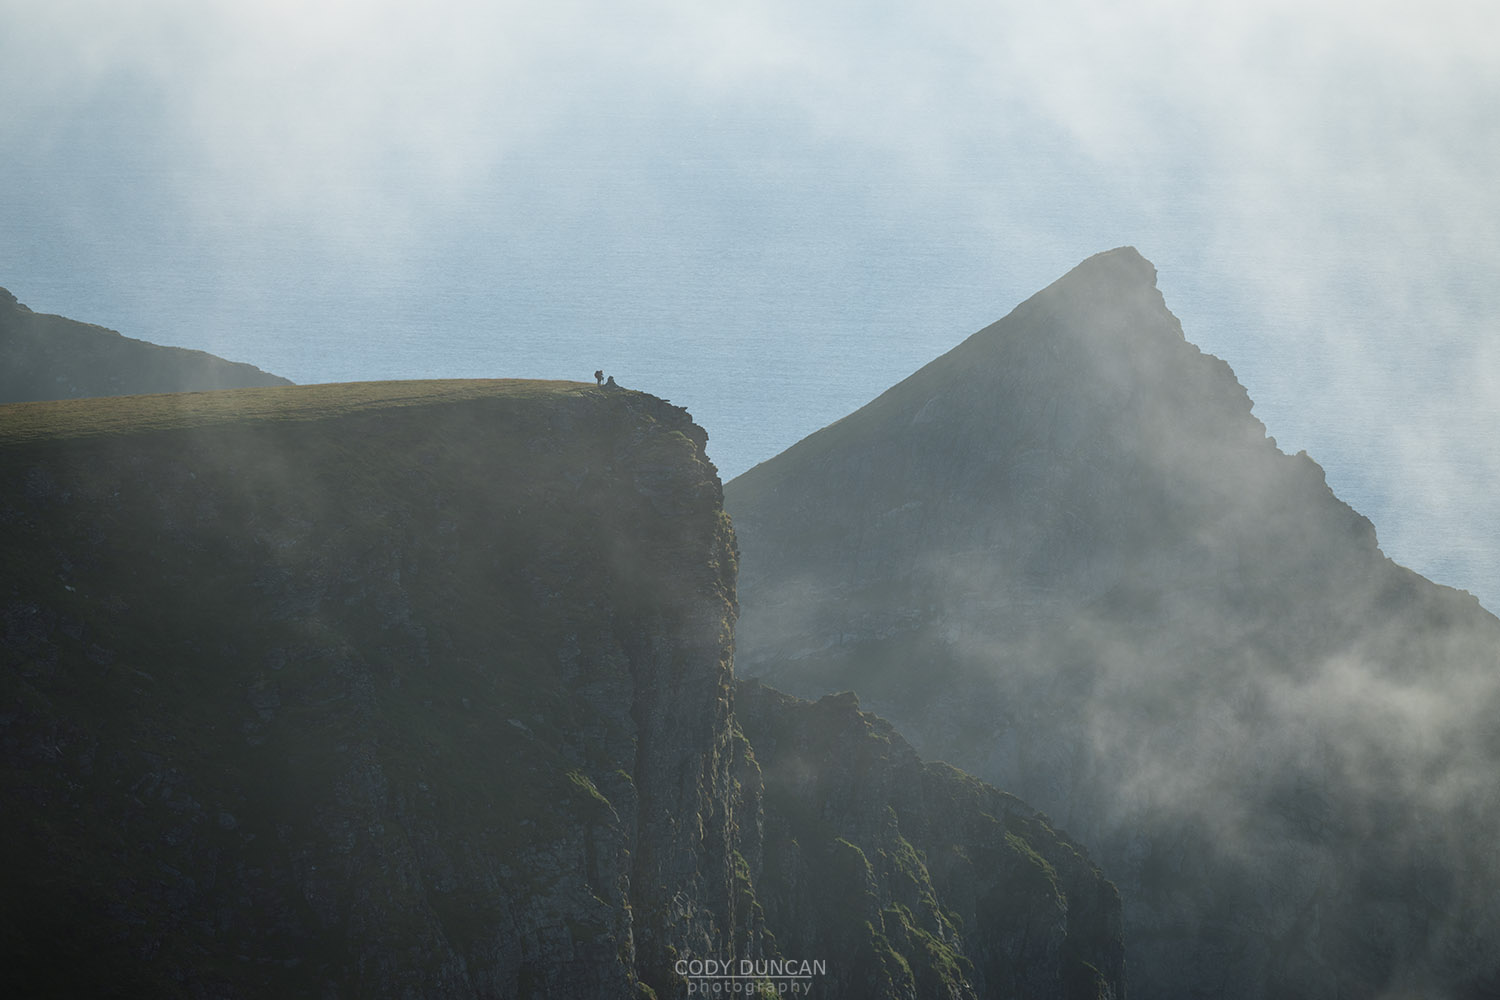 Nordlandsnupen hiking guide, Vaeroy, Lofoten Islands, Norway